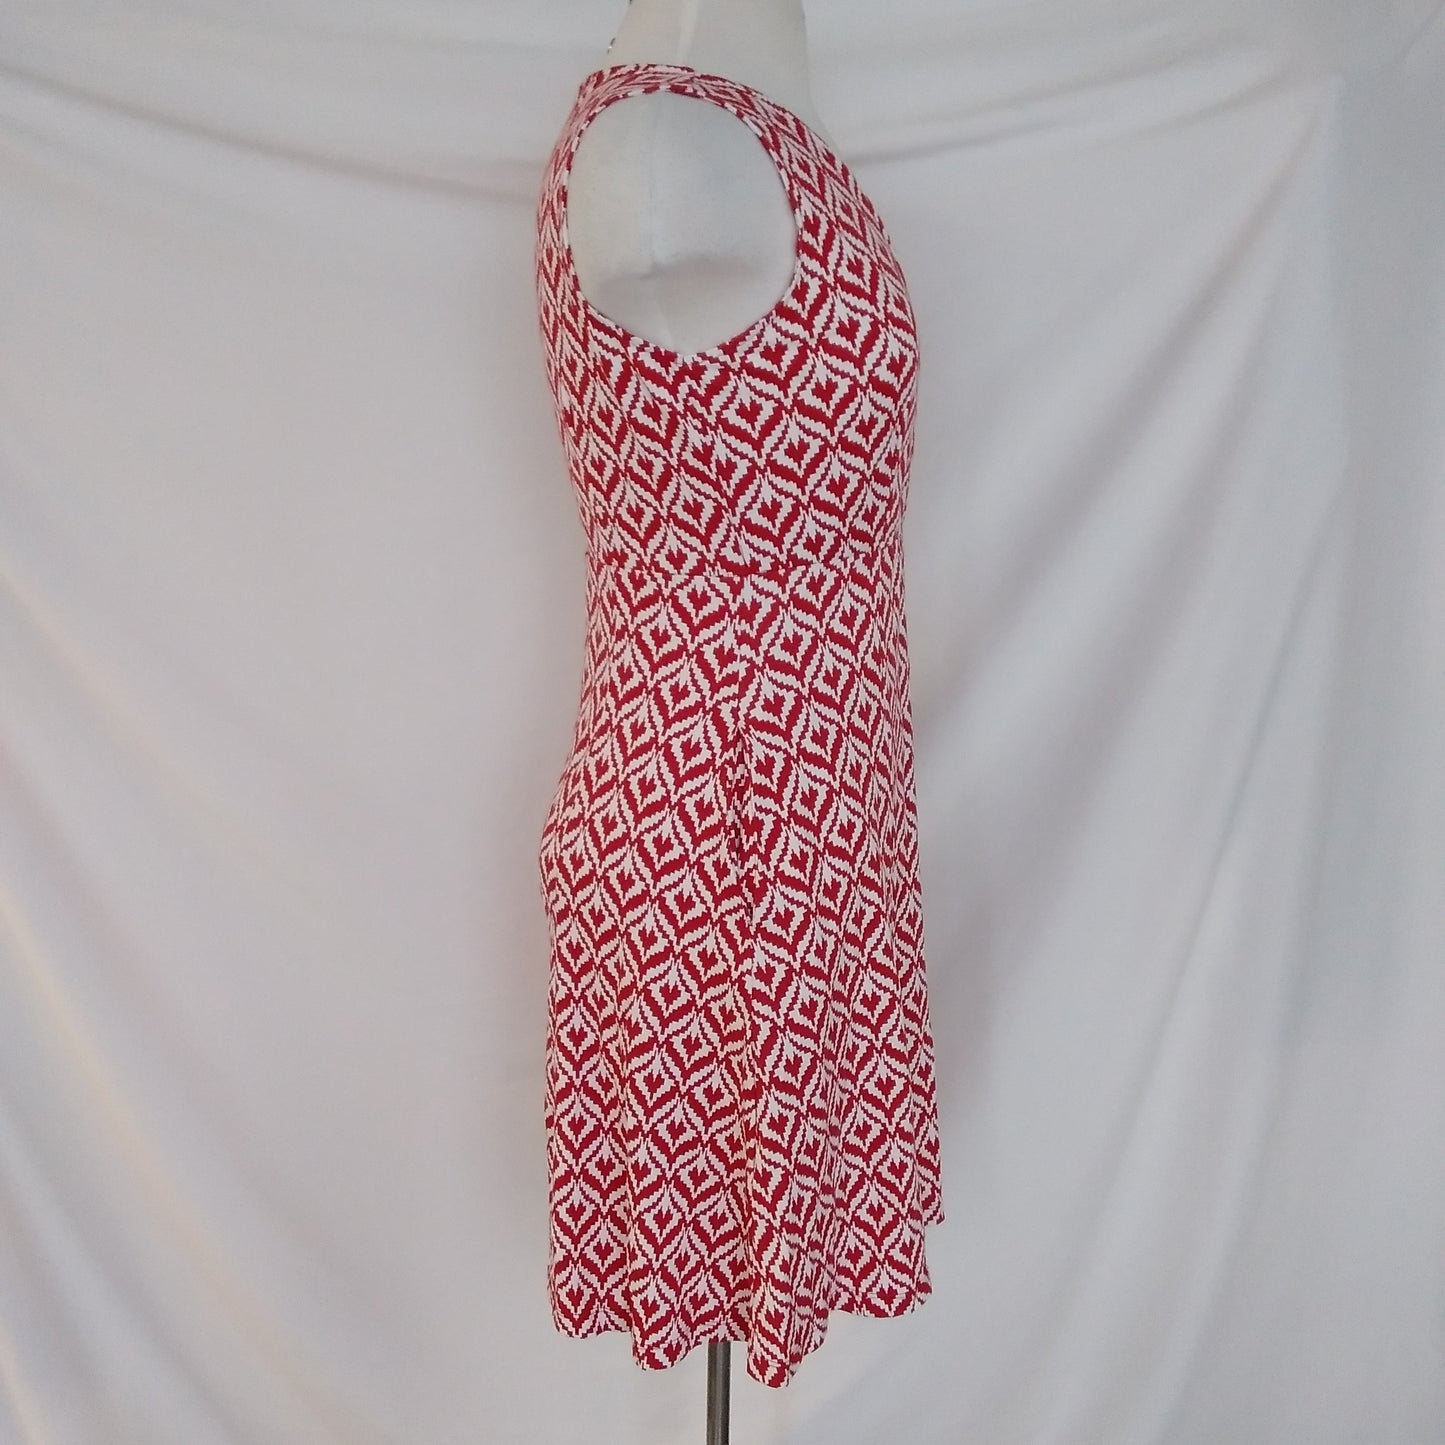 NWT - New York & Company red & white Sleeveless Dress - S